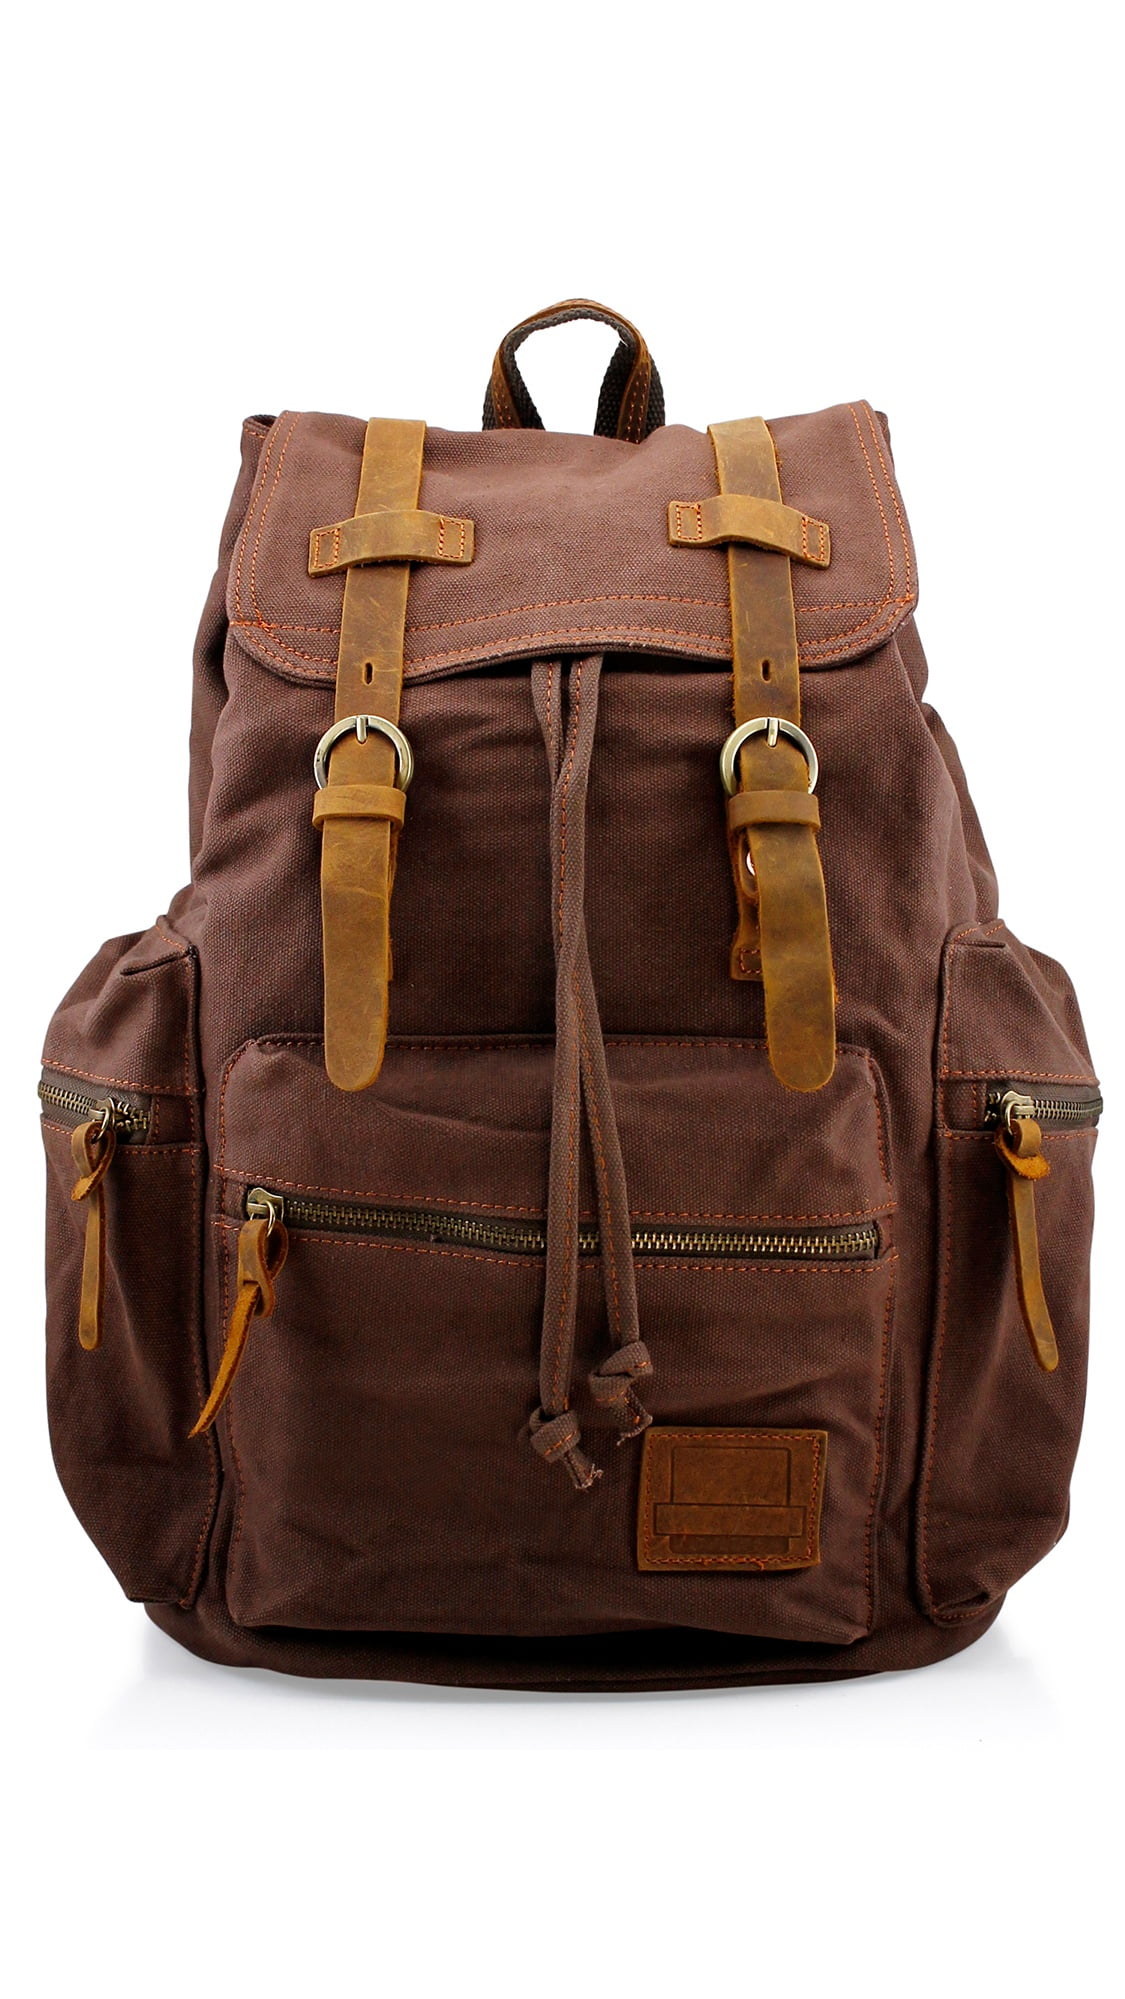 FSD.WG Sling Backpack for Men Chest Bag Crossbody Shoulder Bags Travel Bag Purse for Men with Water Resistant